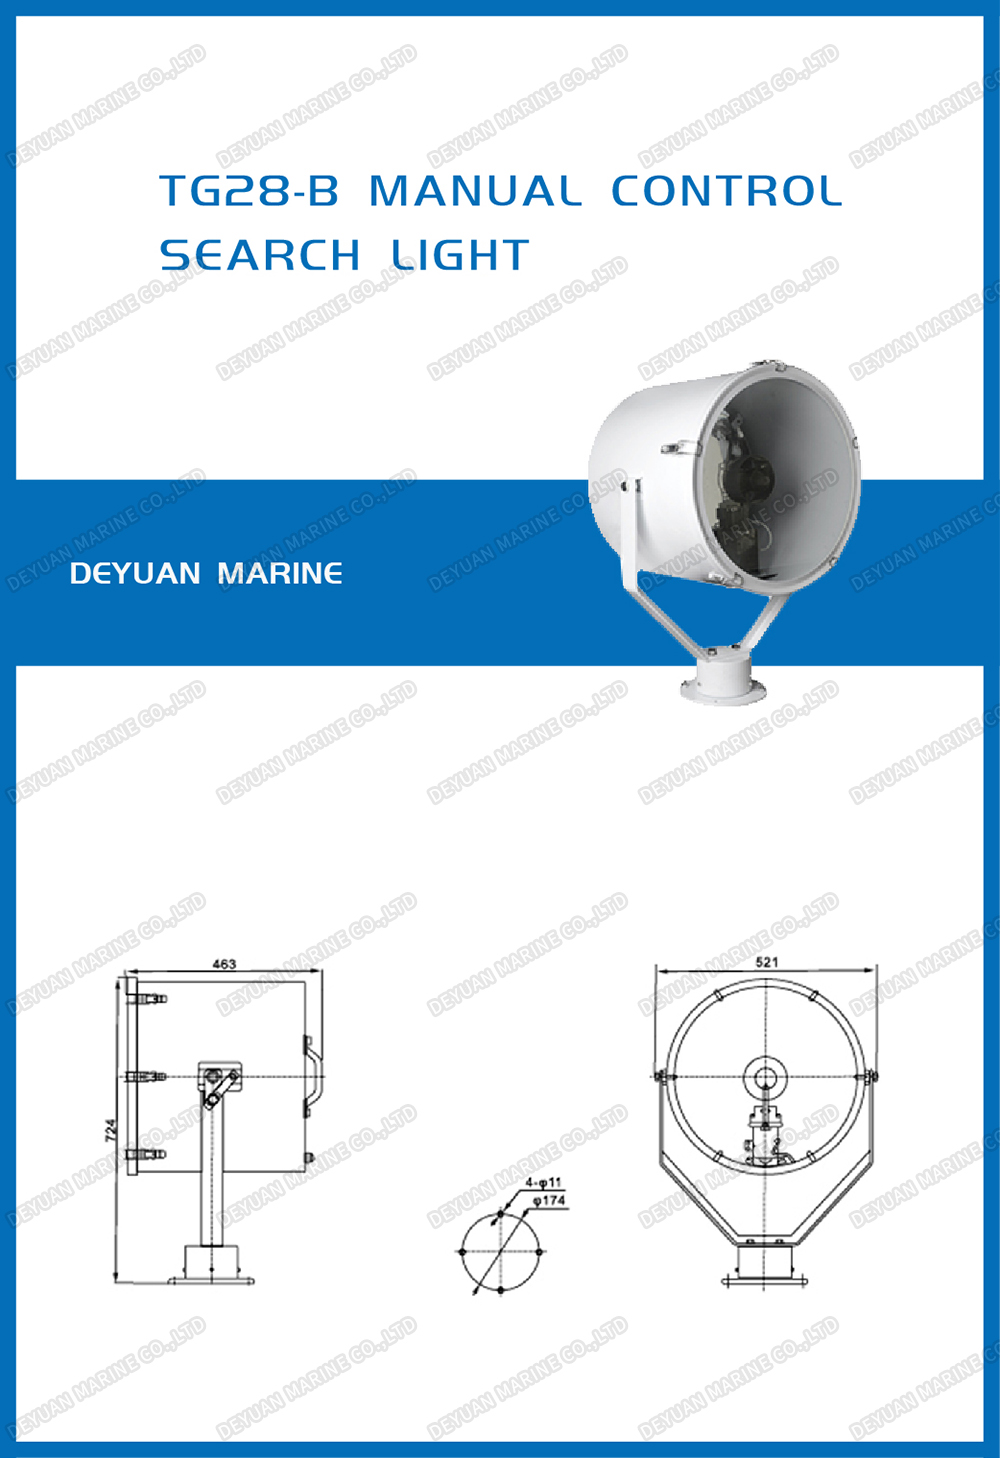 marine manual control search light